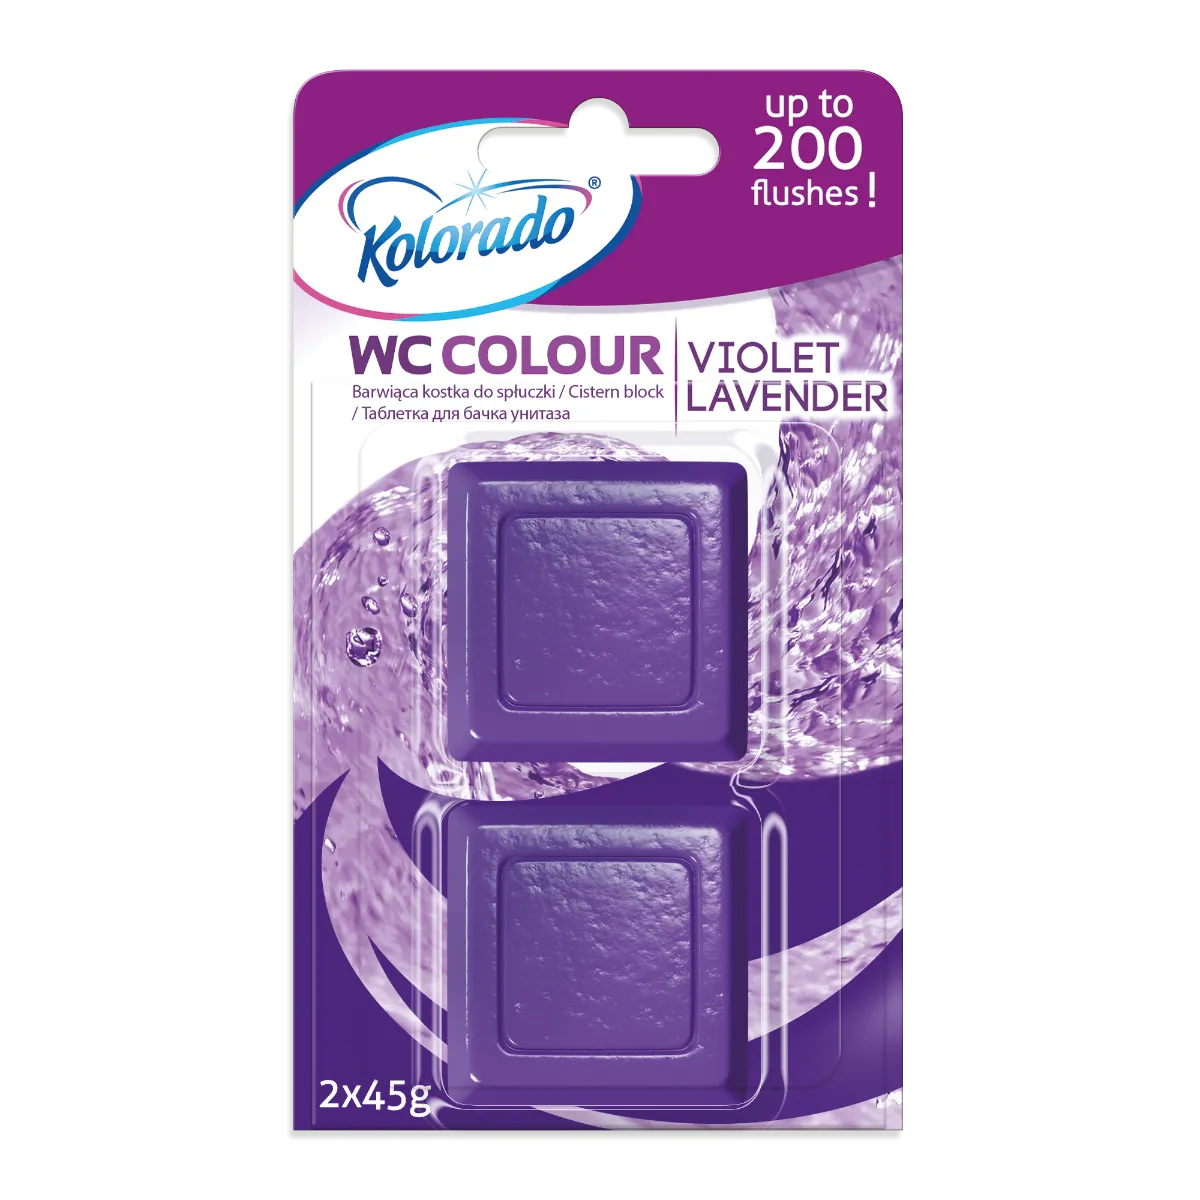 Kolorado Colour Lavender Violet kostka do WC, 2 szt.